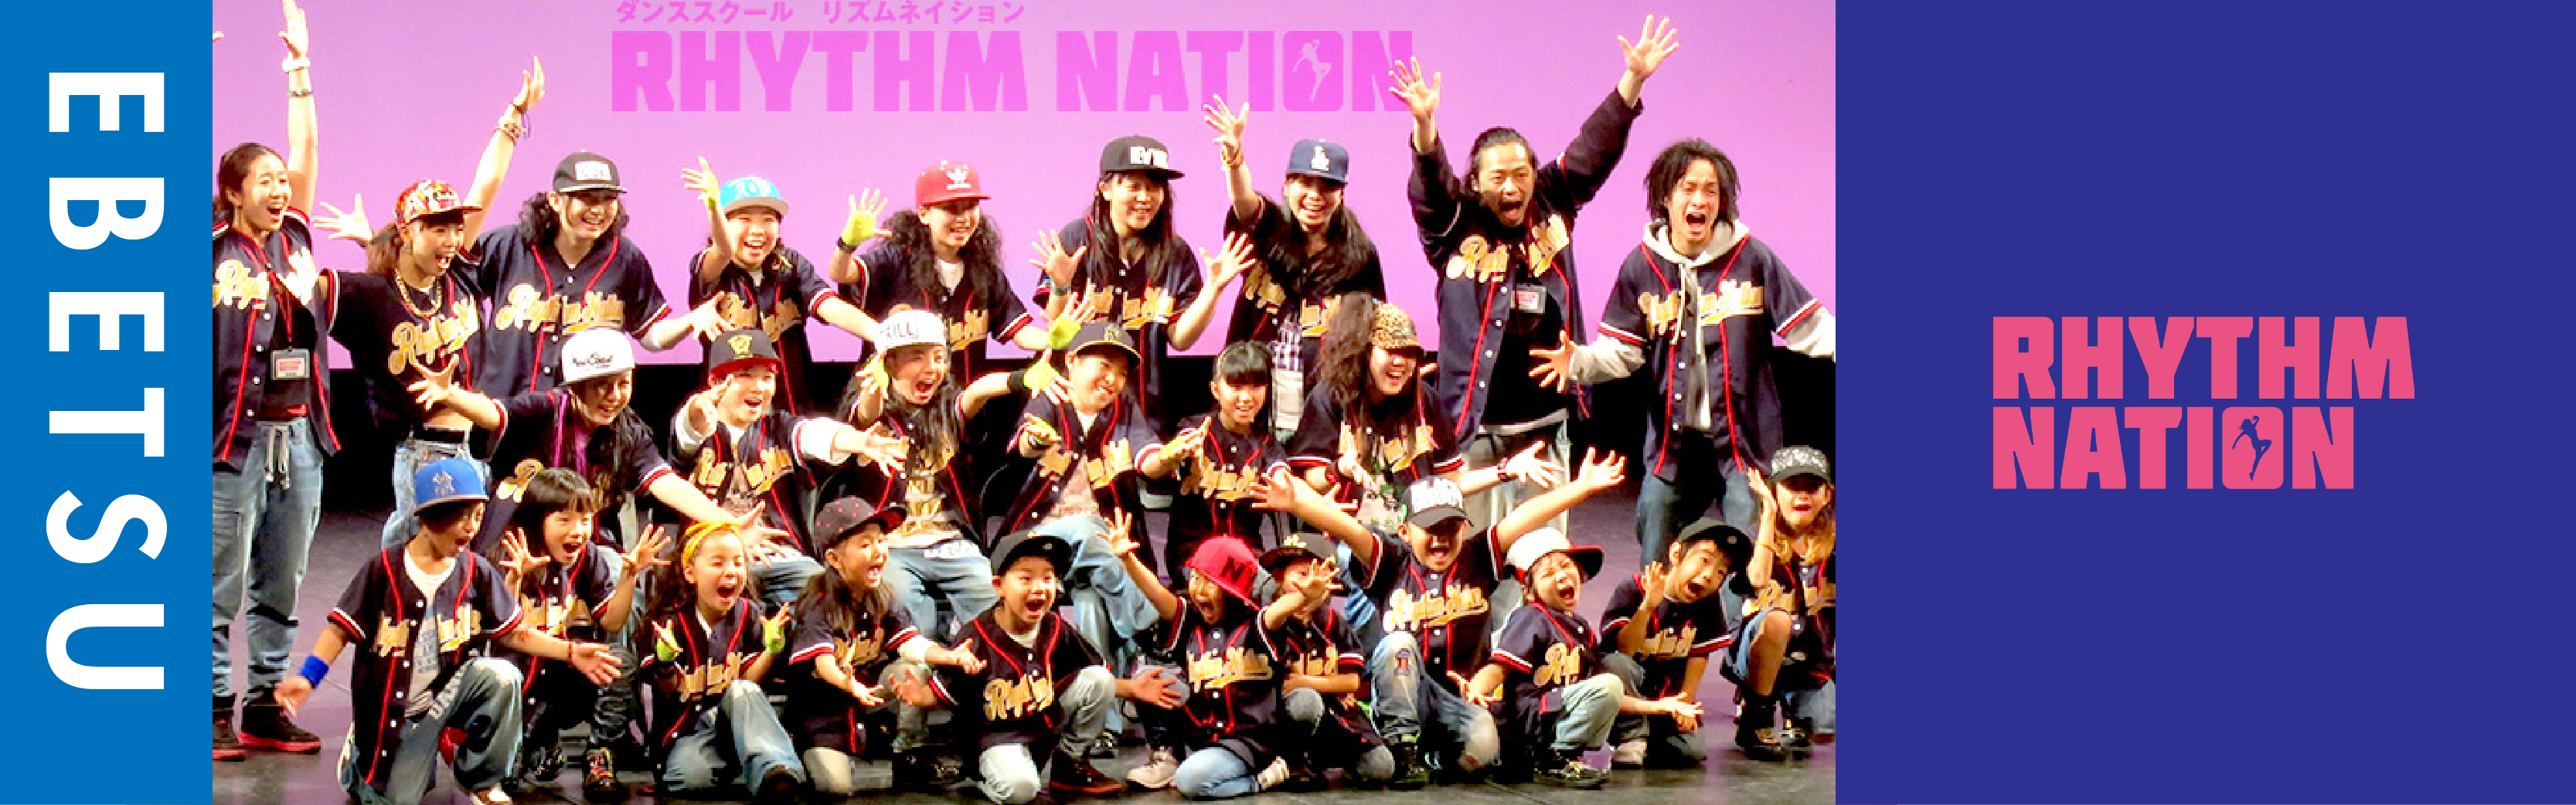 Rhythm Nation 江別 Studio Play The Dance ダンスをアソベ 北海道ストリートダンス